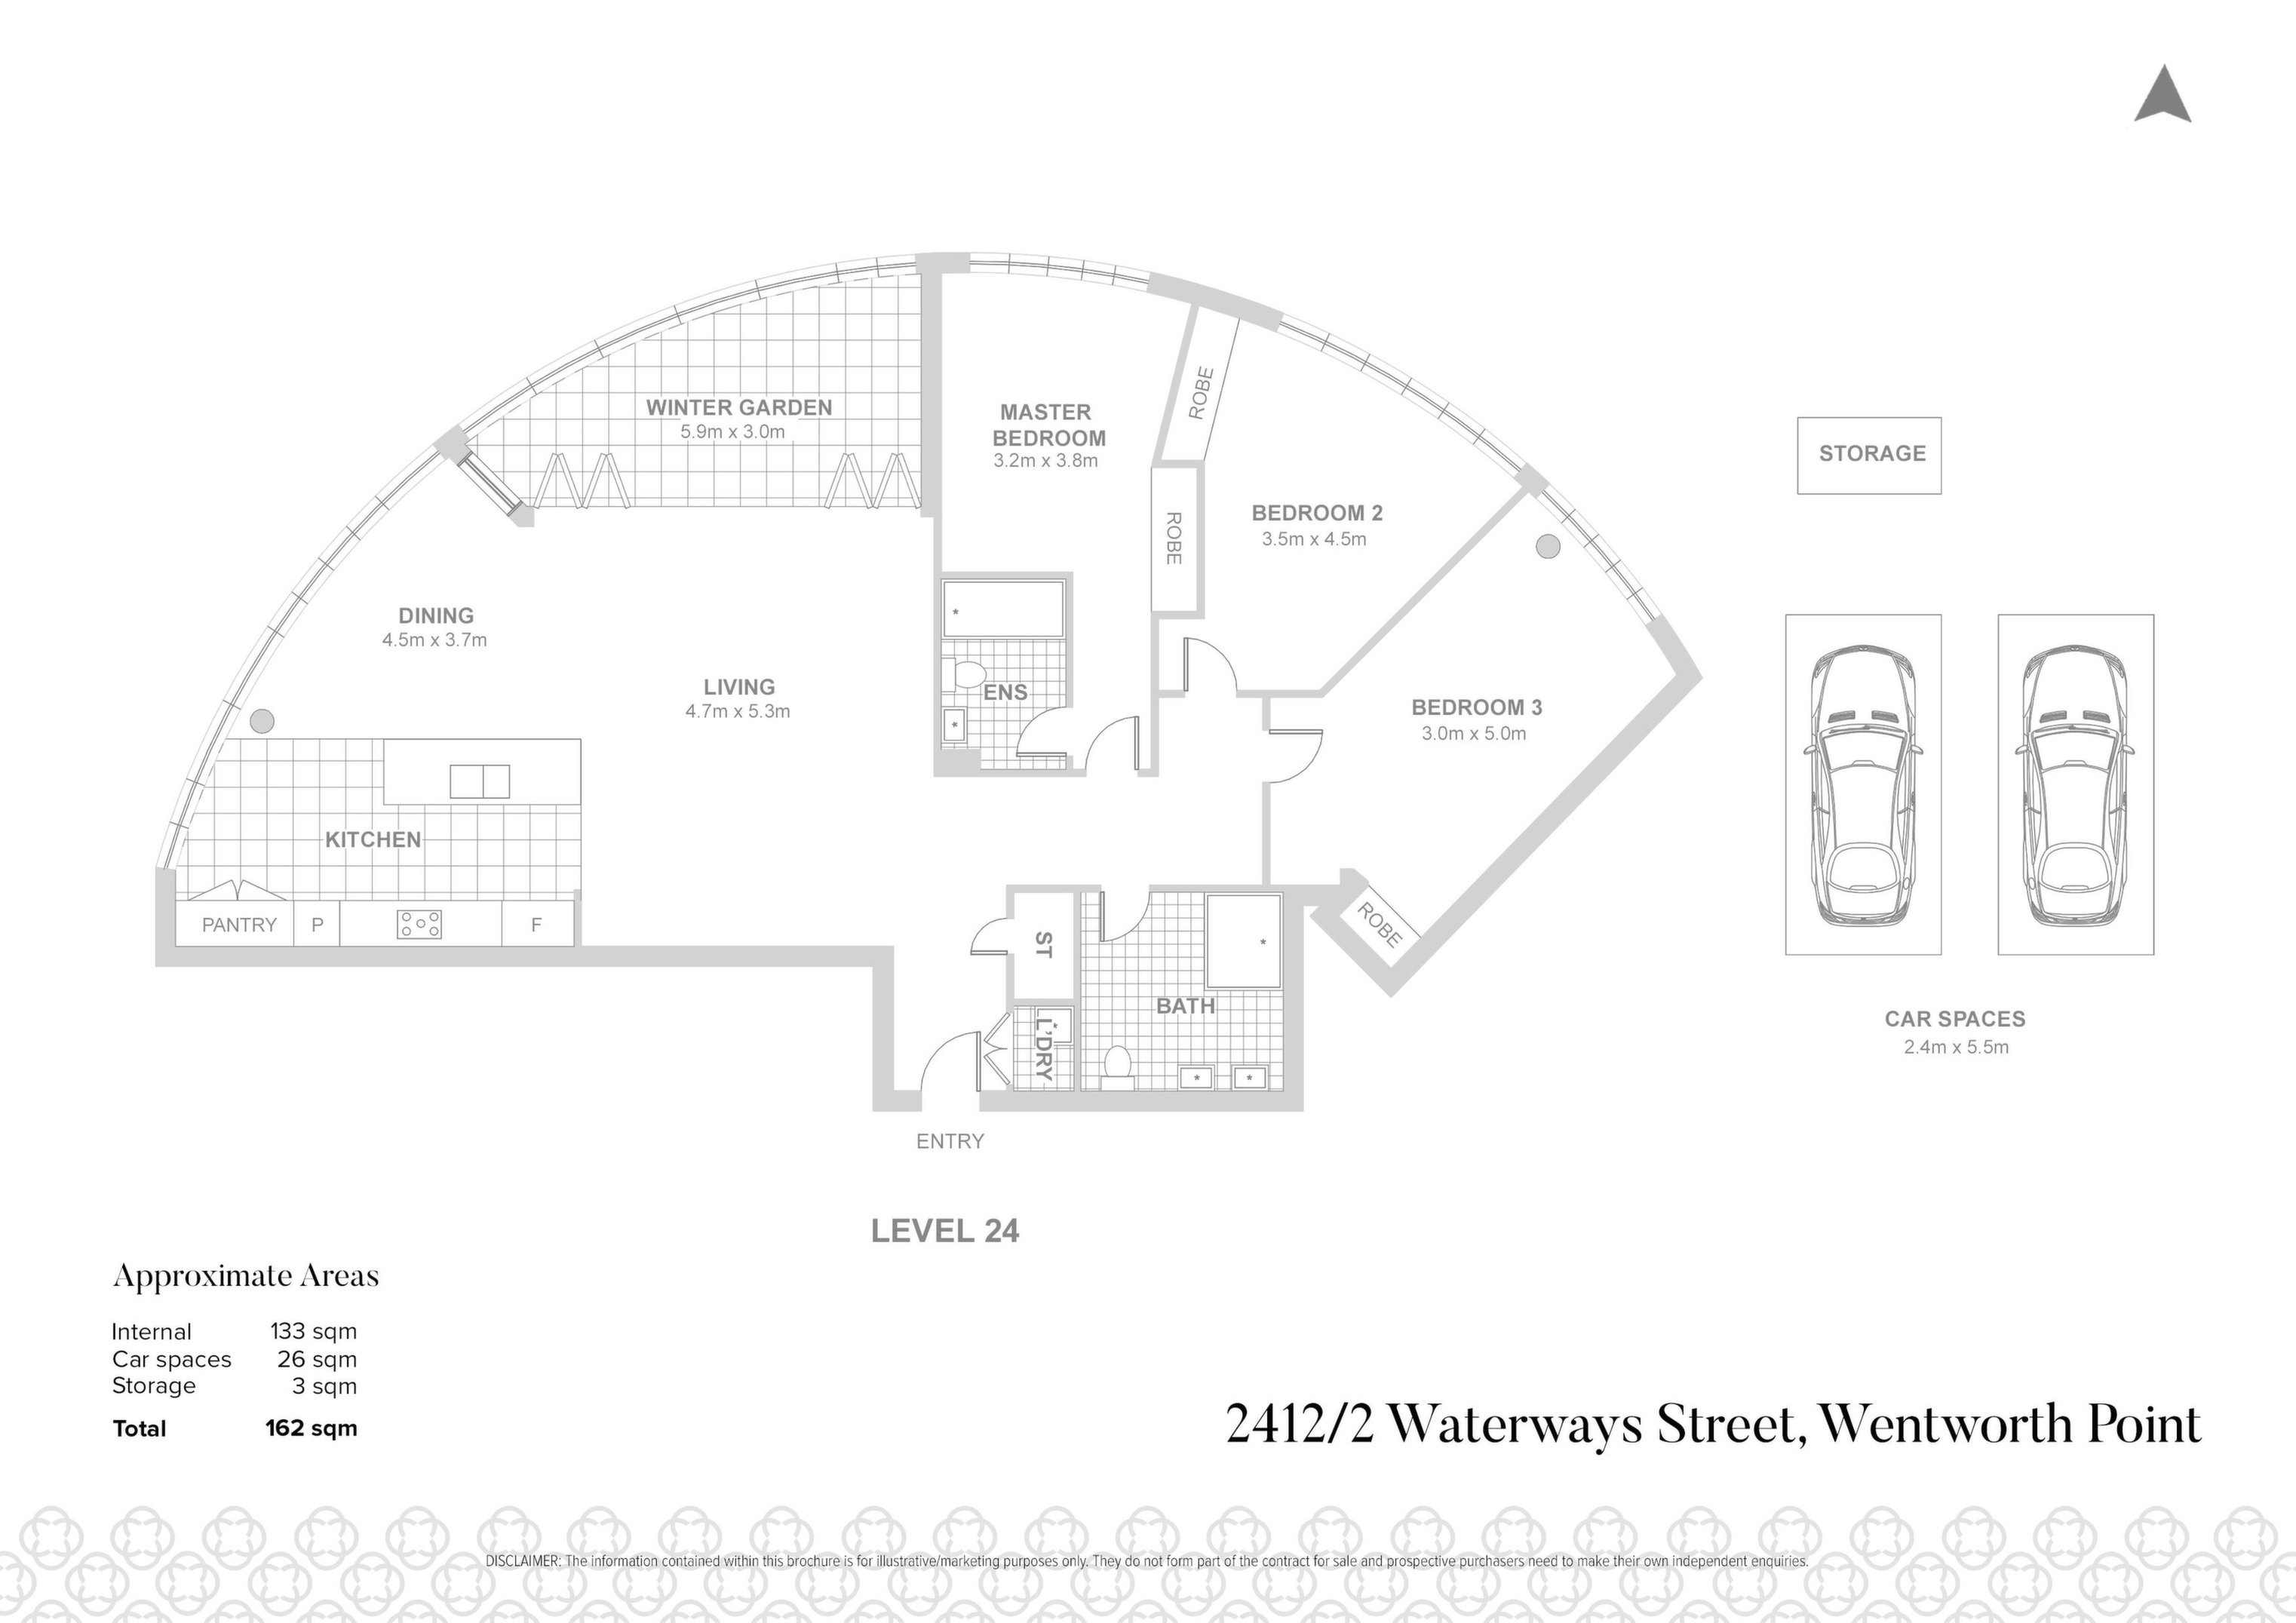 2412/2 Waterways St, Wentworth Point Sold by Chidiac Realty - floorplan